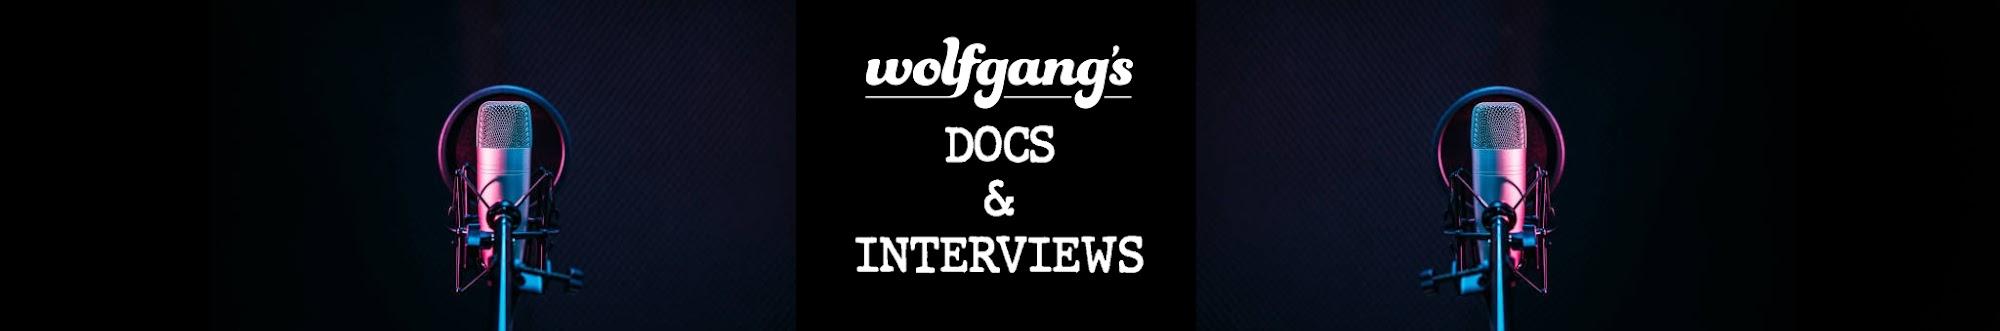 Wolfgang's Documentaries & Interviews 